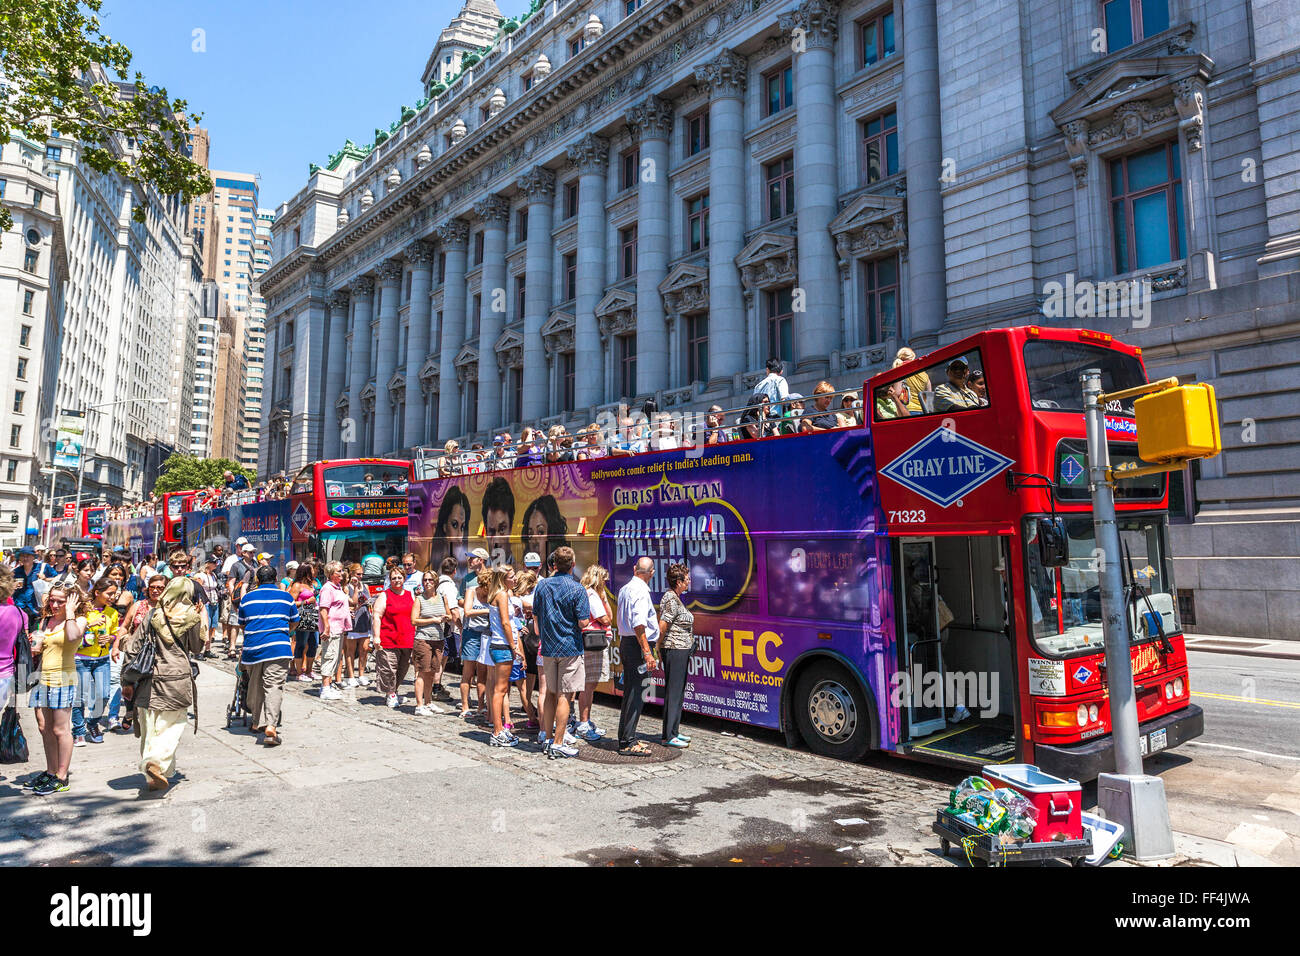 Sightseeing tour buses picking up passengers, London, England, UK. Stock Photo